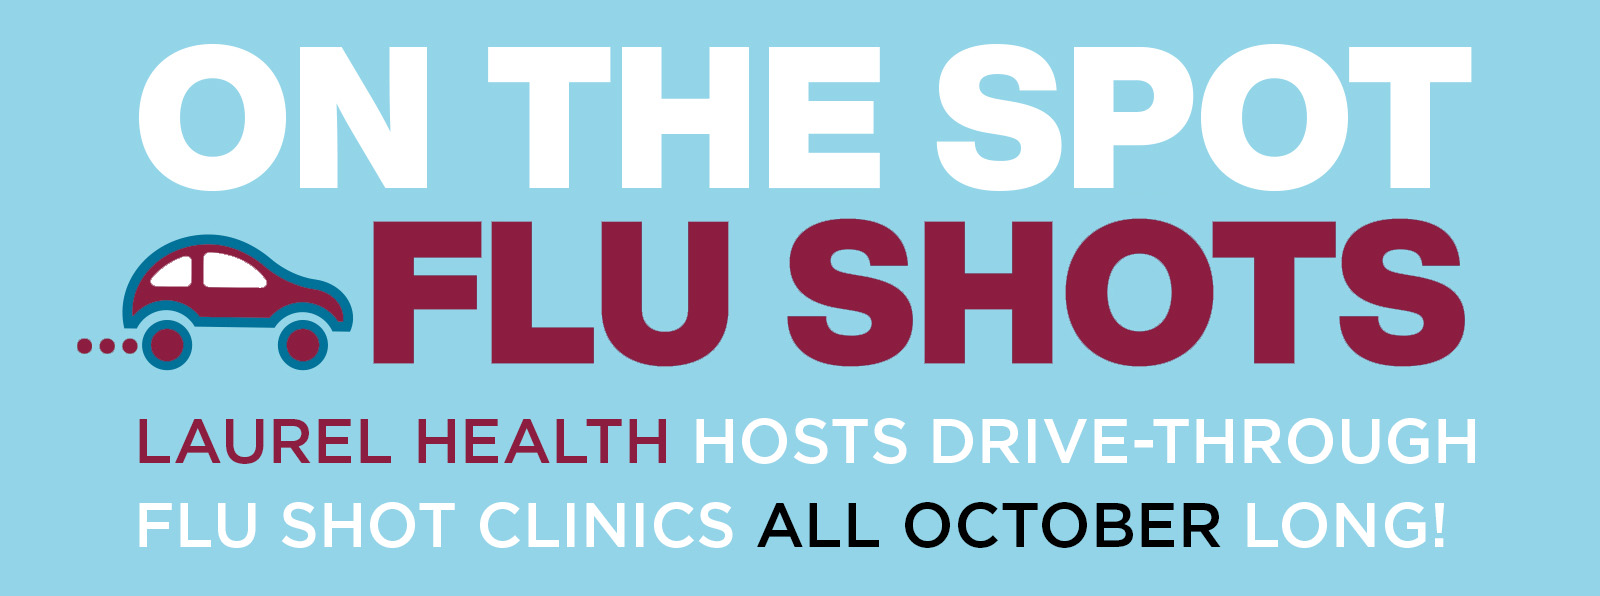 Laurel Health Offers Drive-through Flu Shot Clinics Throughout October